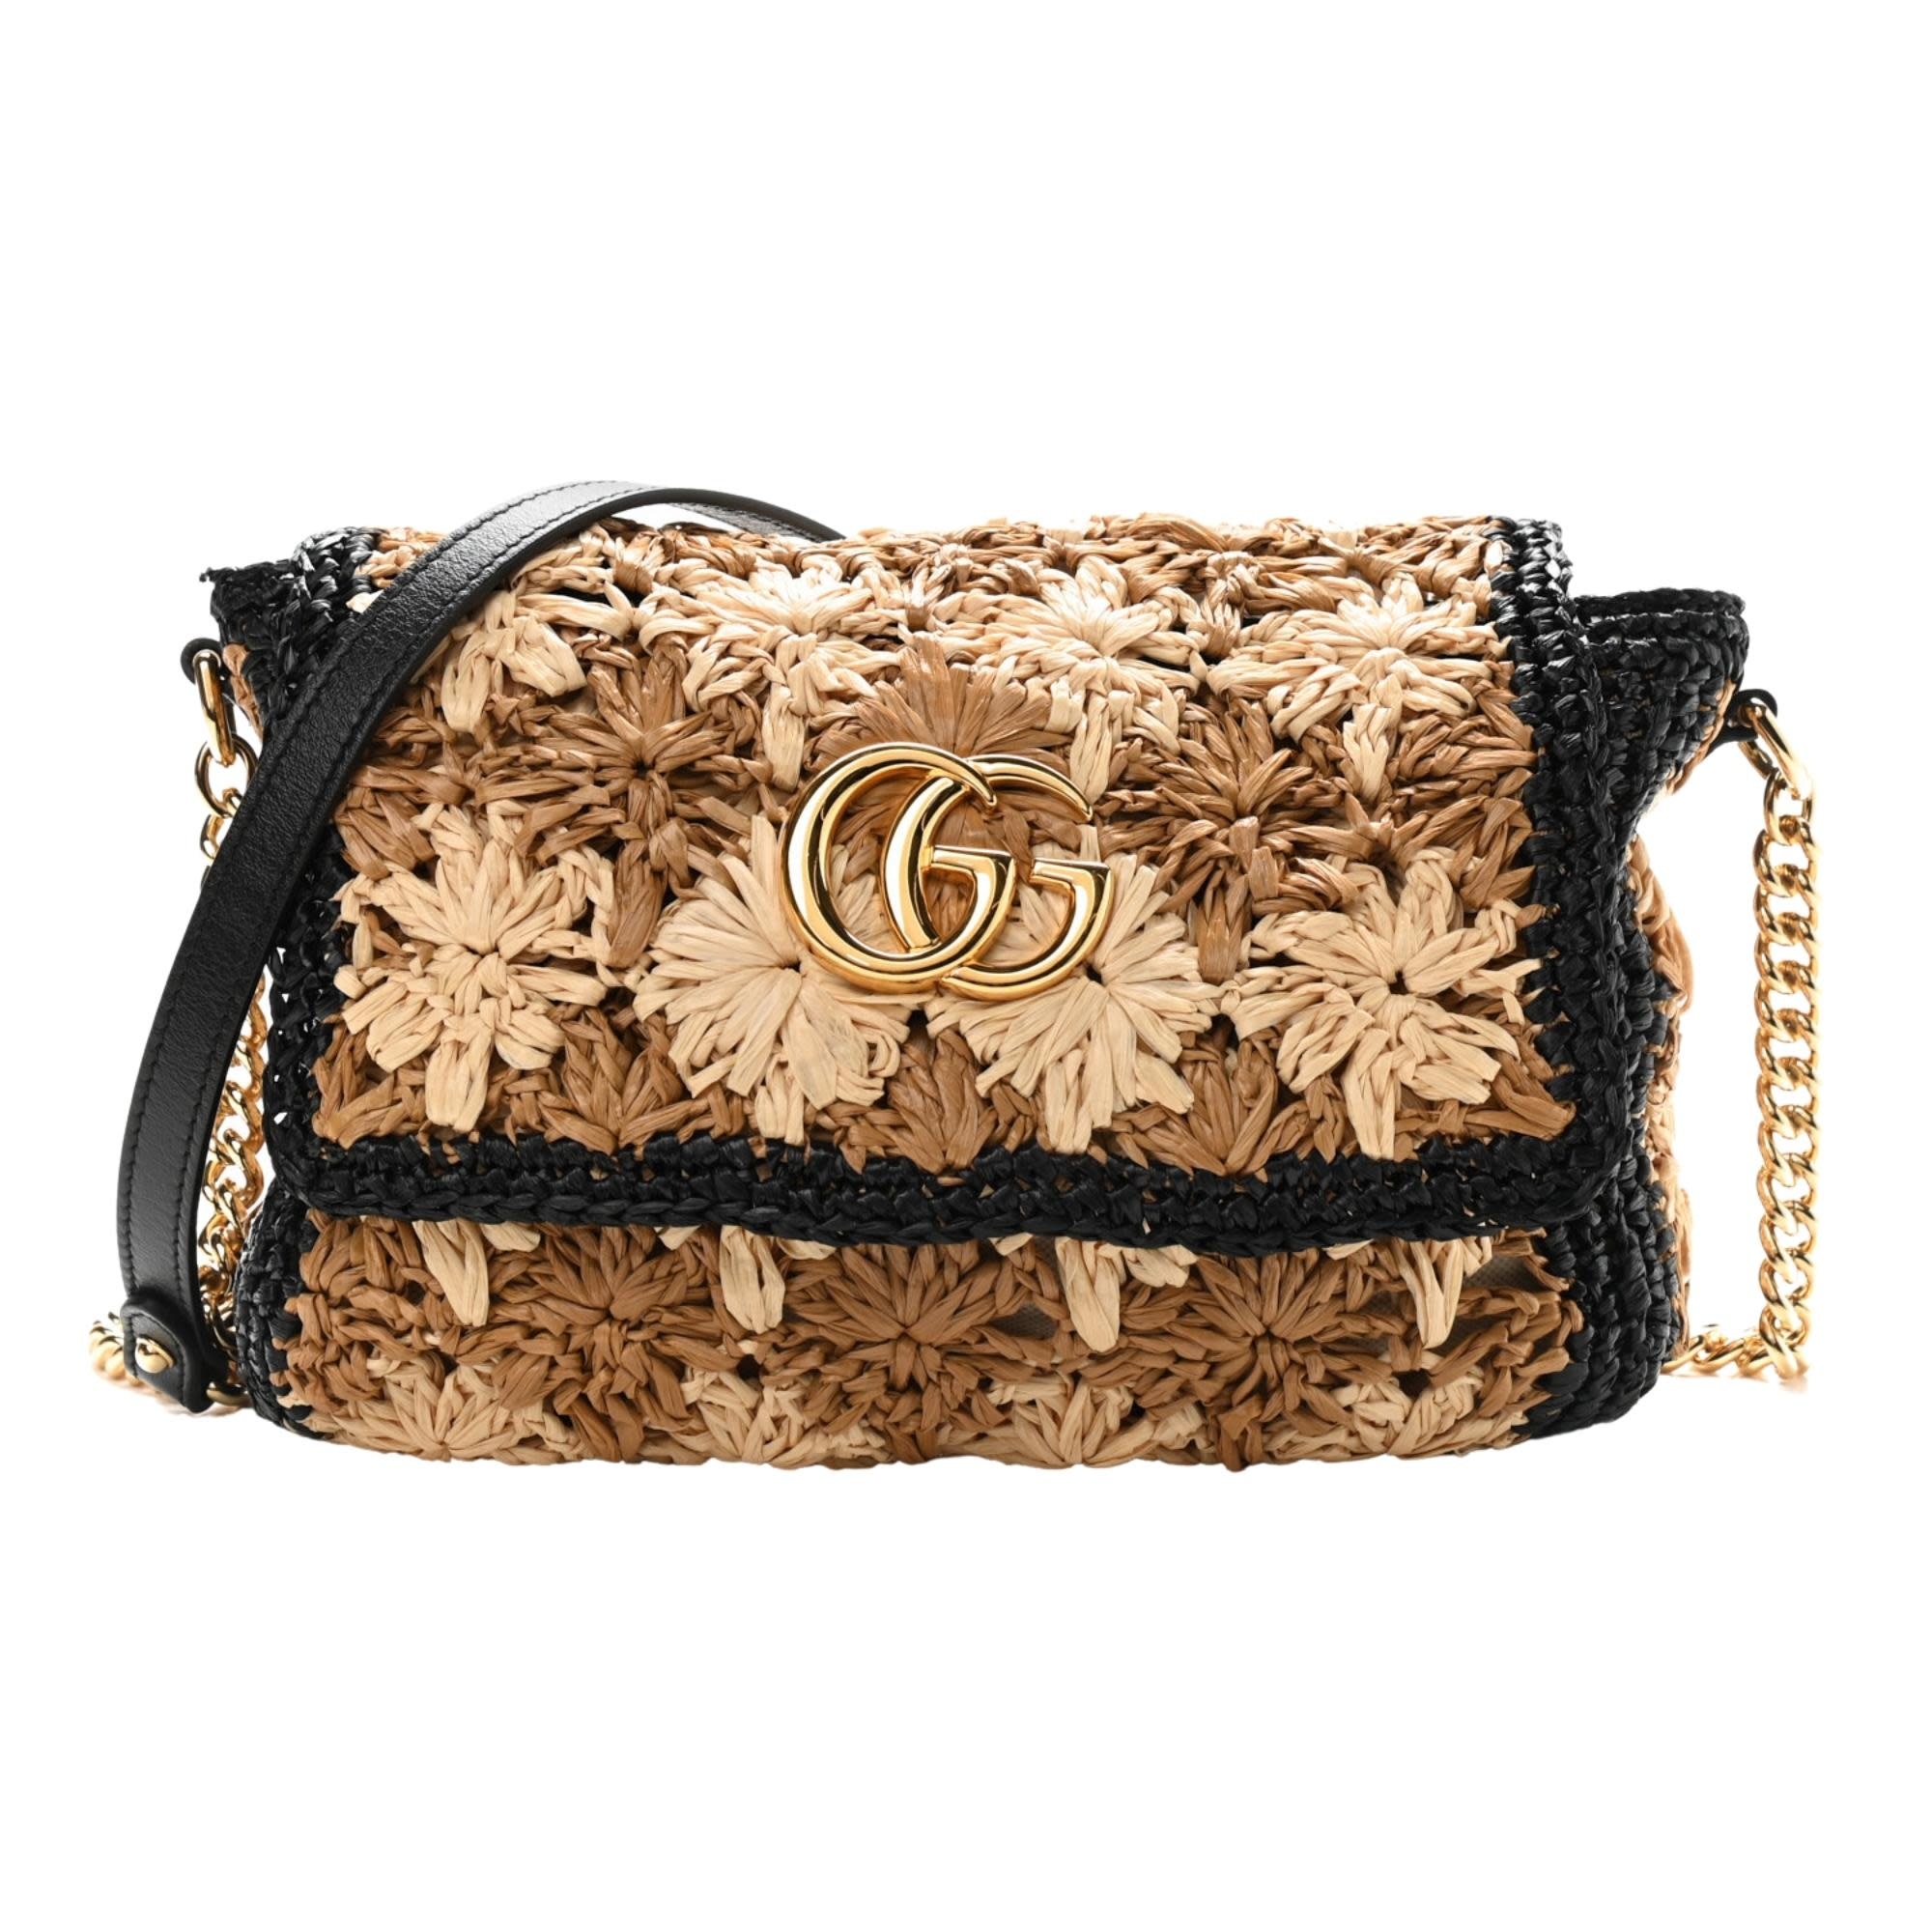 Gucci: Black Small GG Marmont Shoulder Bag